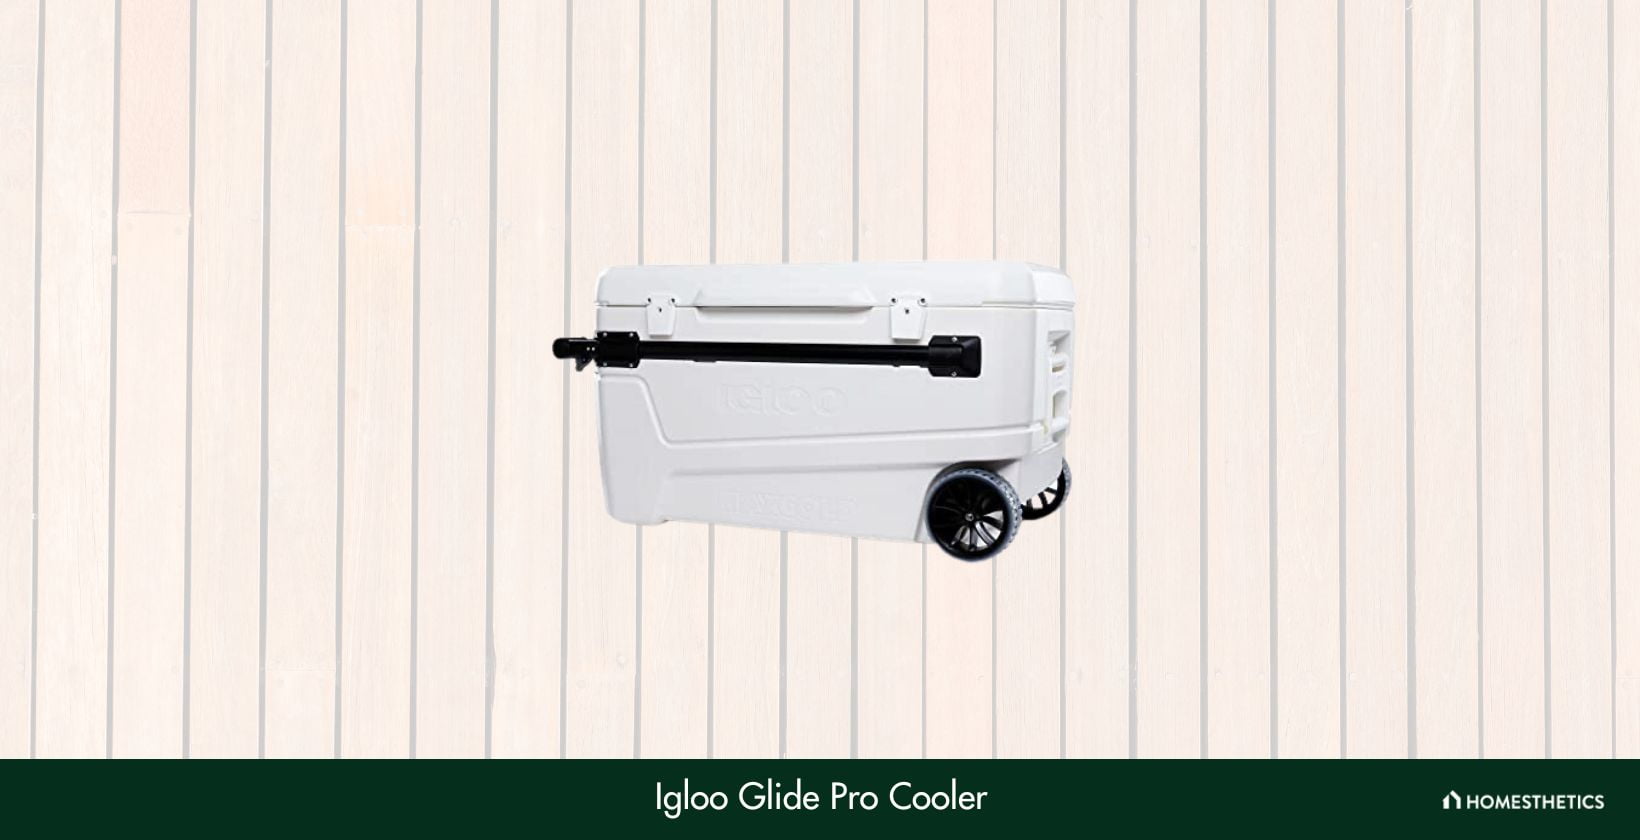 Igloo Glide Pro Cooler